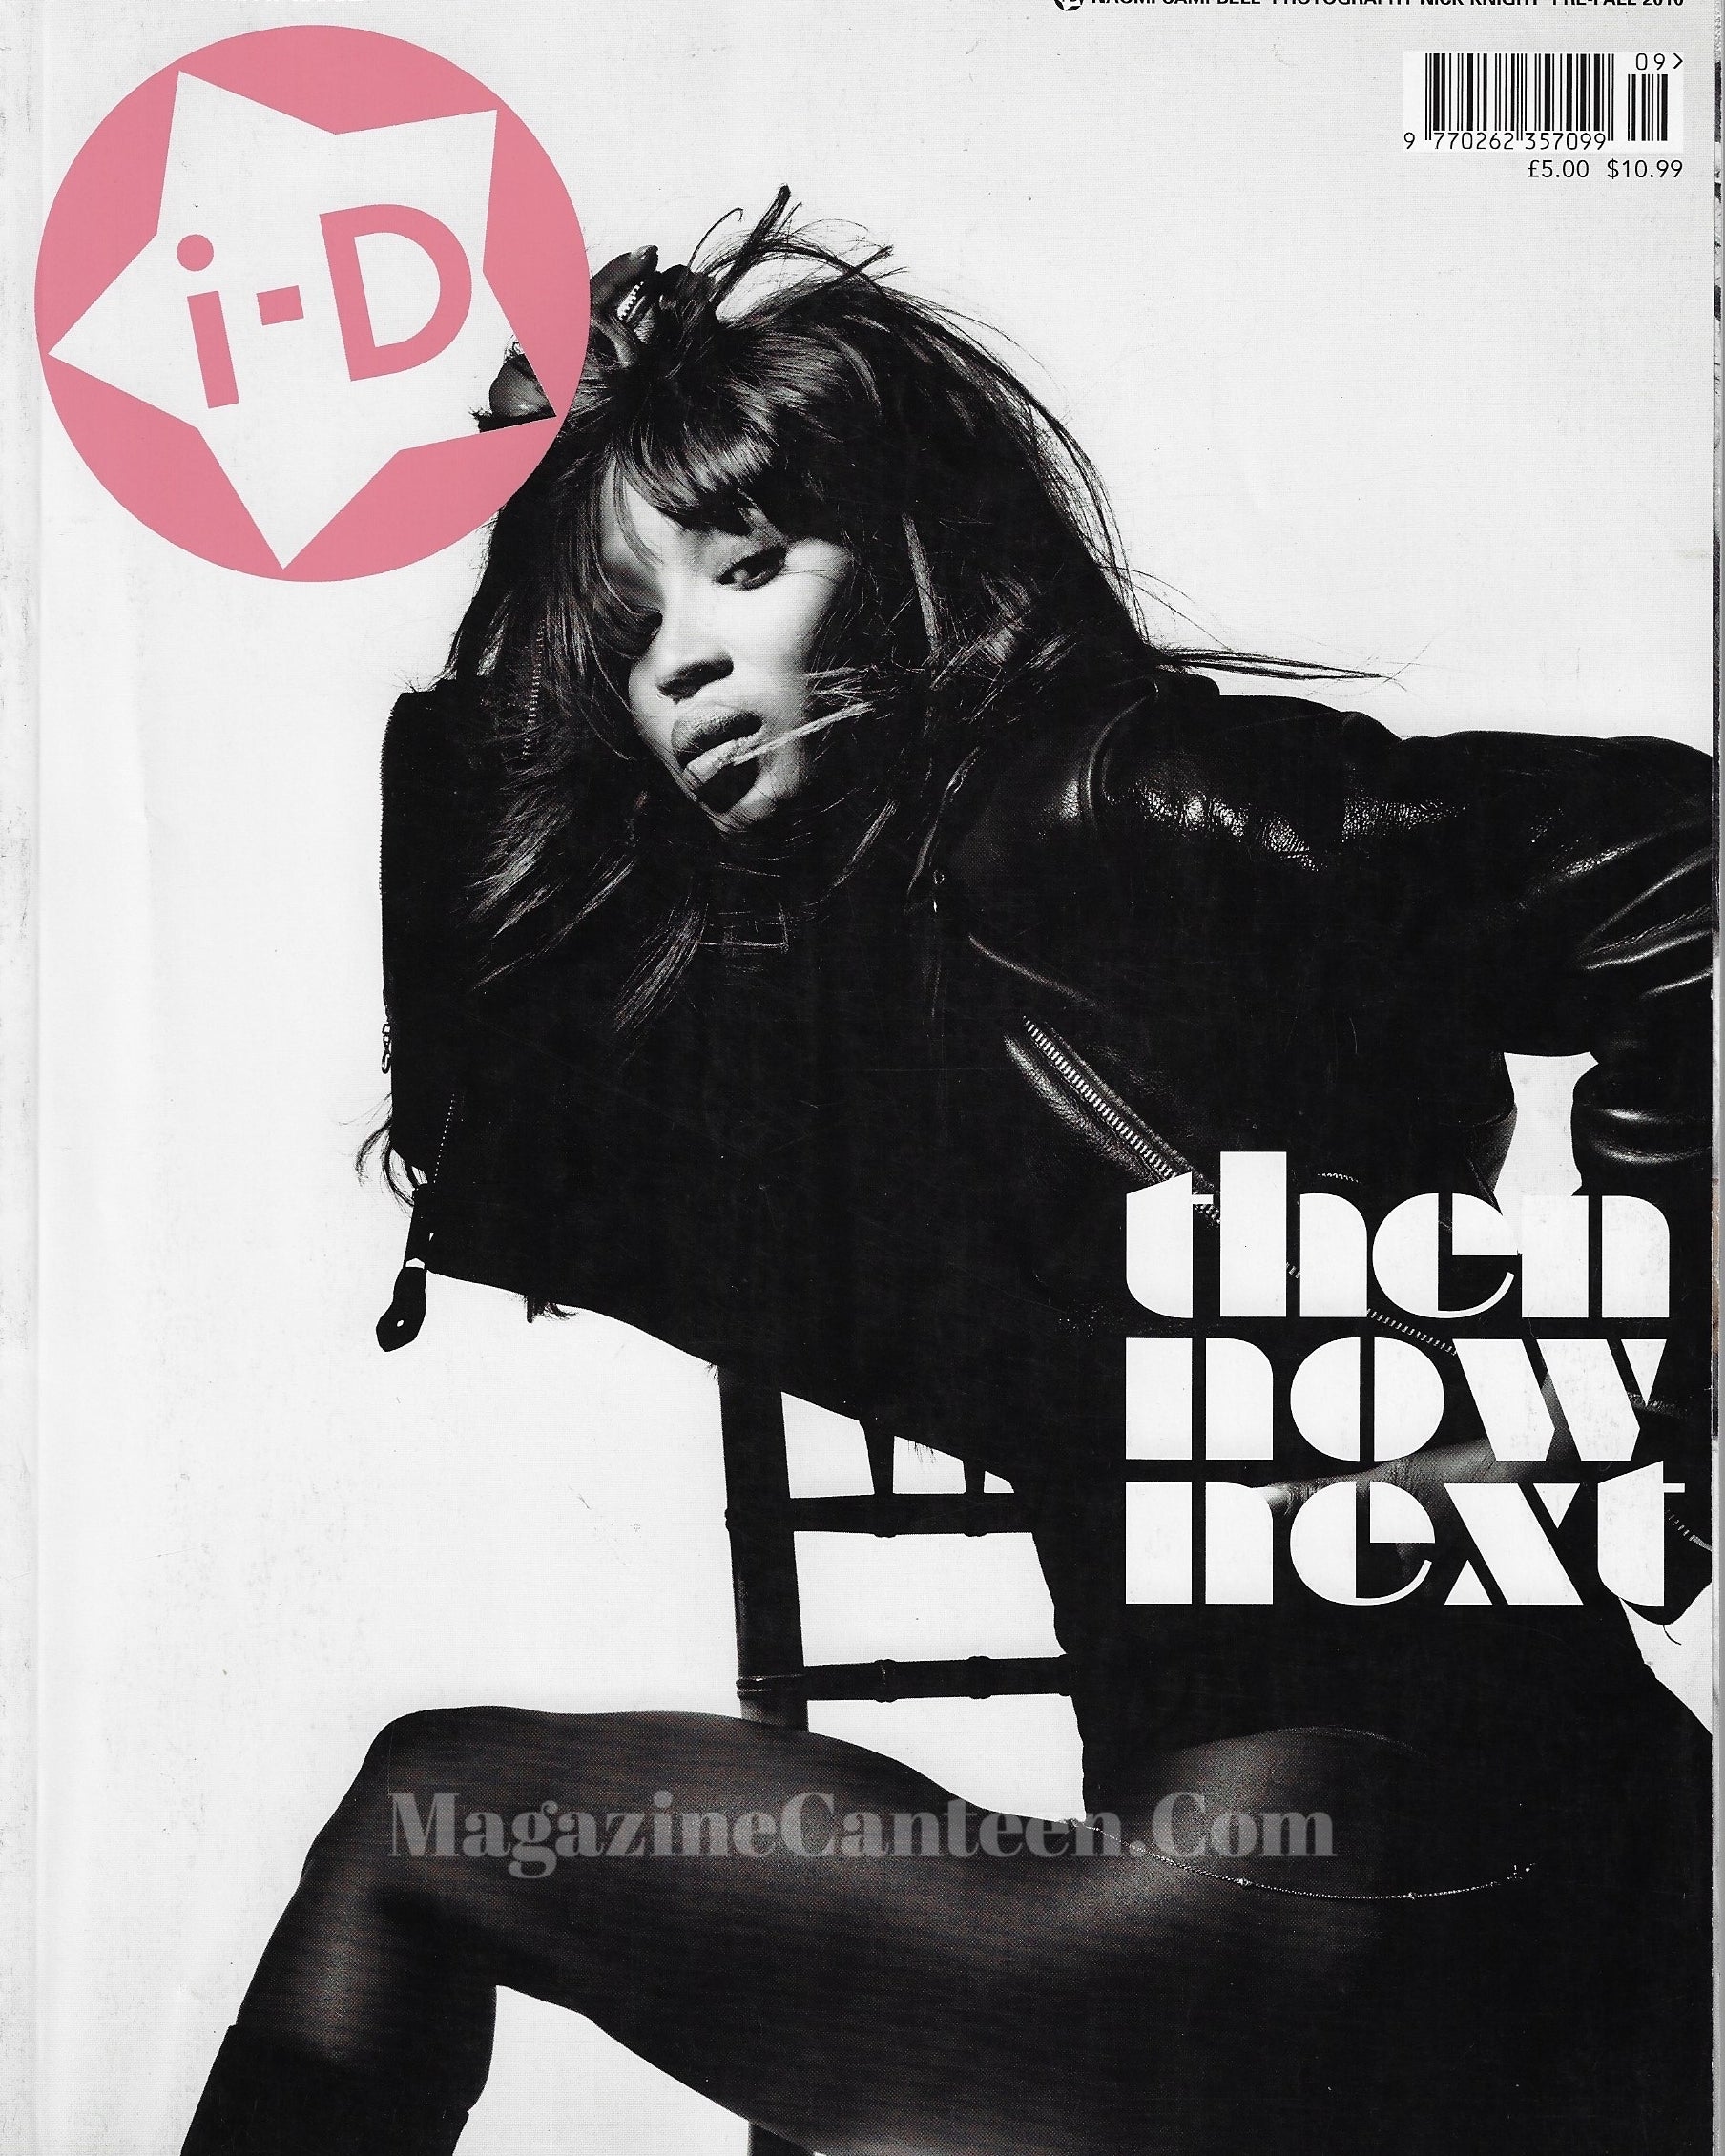 I-D Magazine 308 - Naomi Campbell 2010